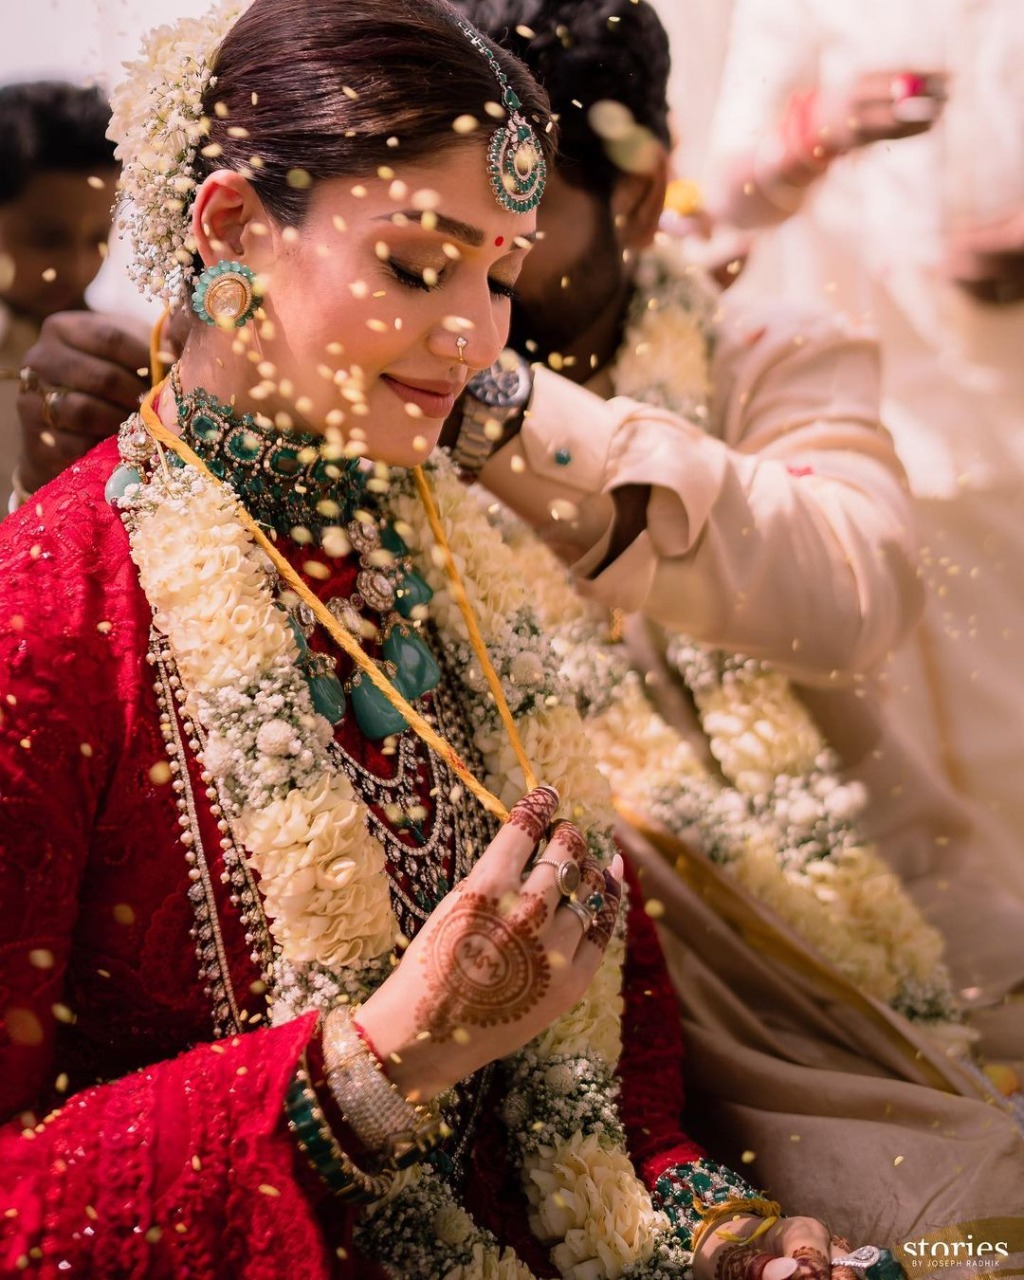 Nayanthara vignesh shivan marriage photos getting viral on social media